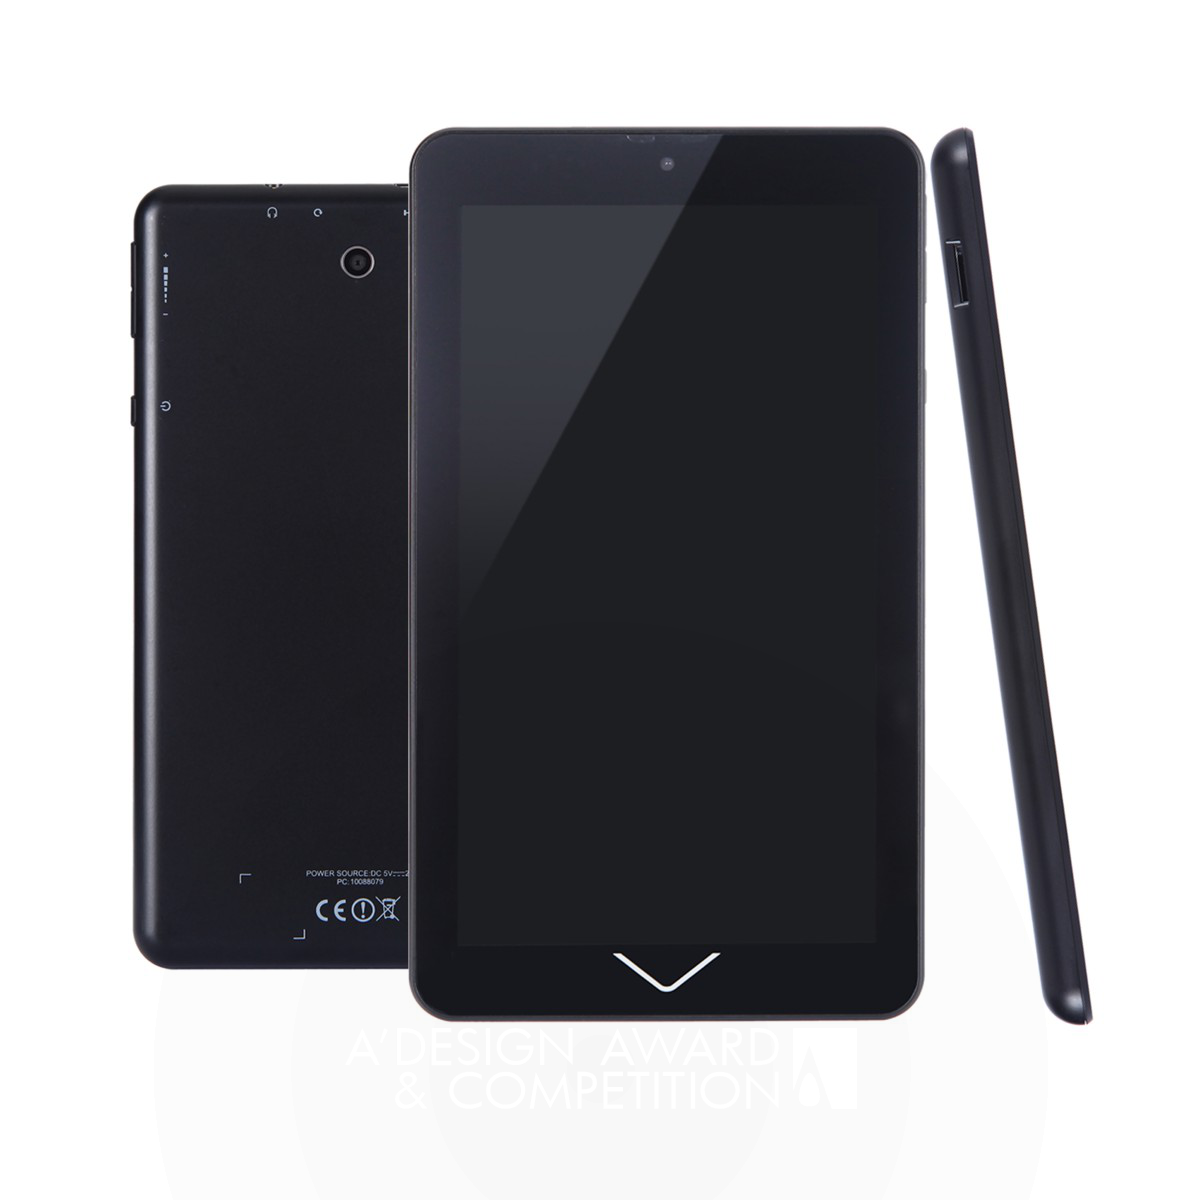 Venus 7" tablet PC tablet PC by Vestel ID Team